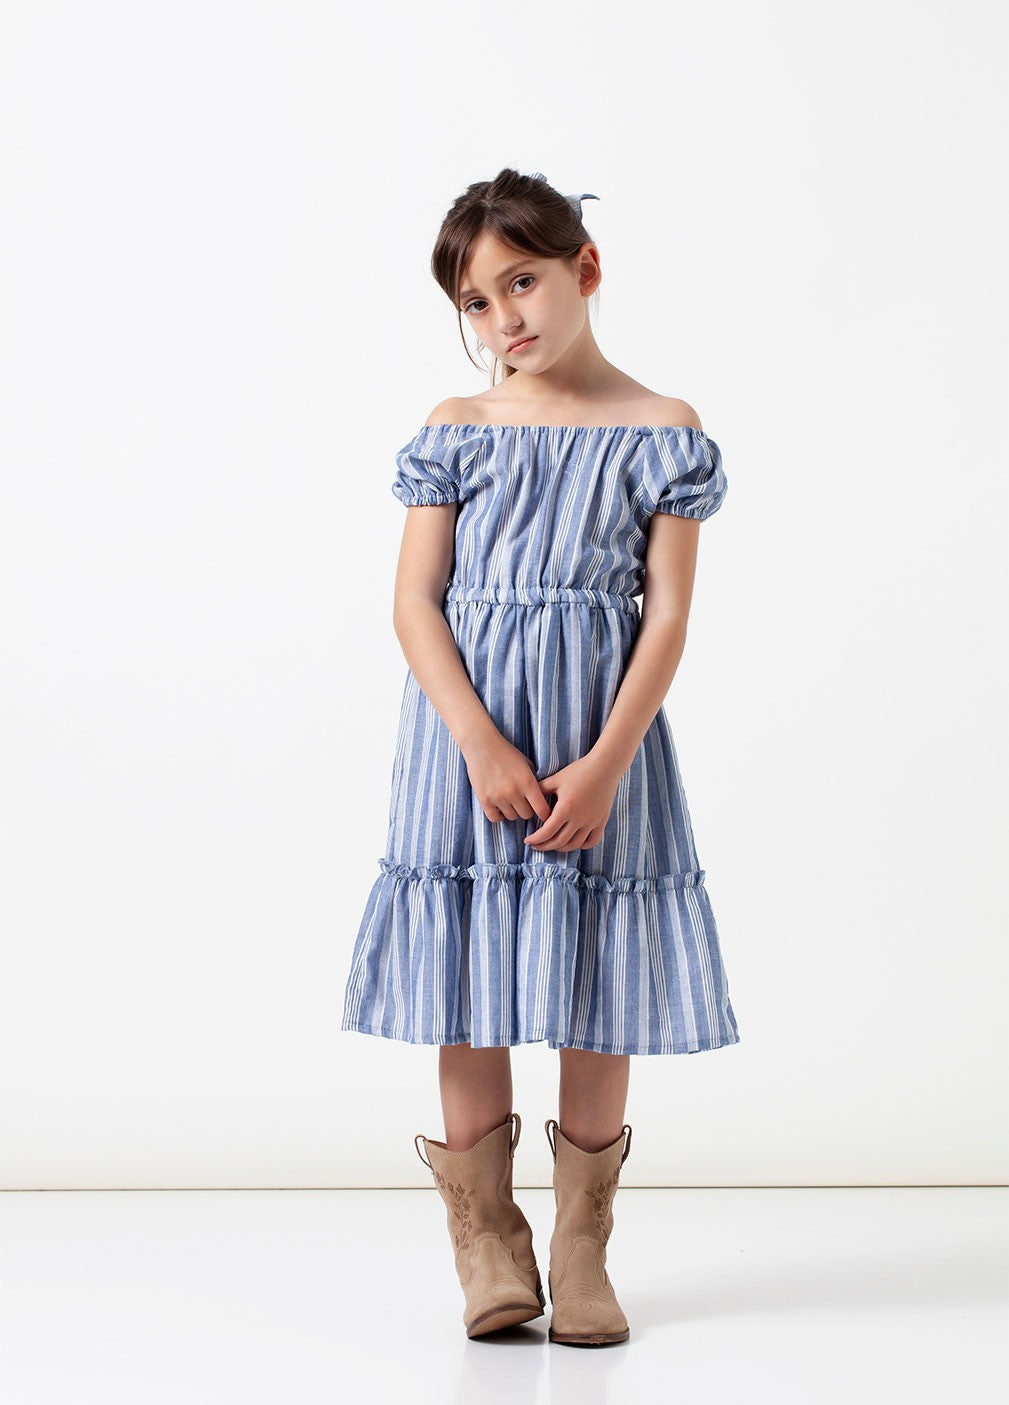 Dress Girl Striped Blue - قصيرة